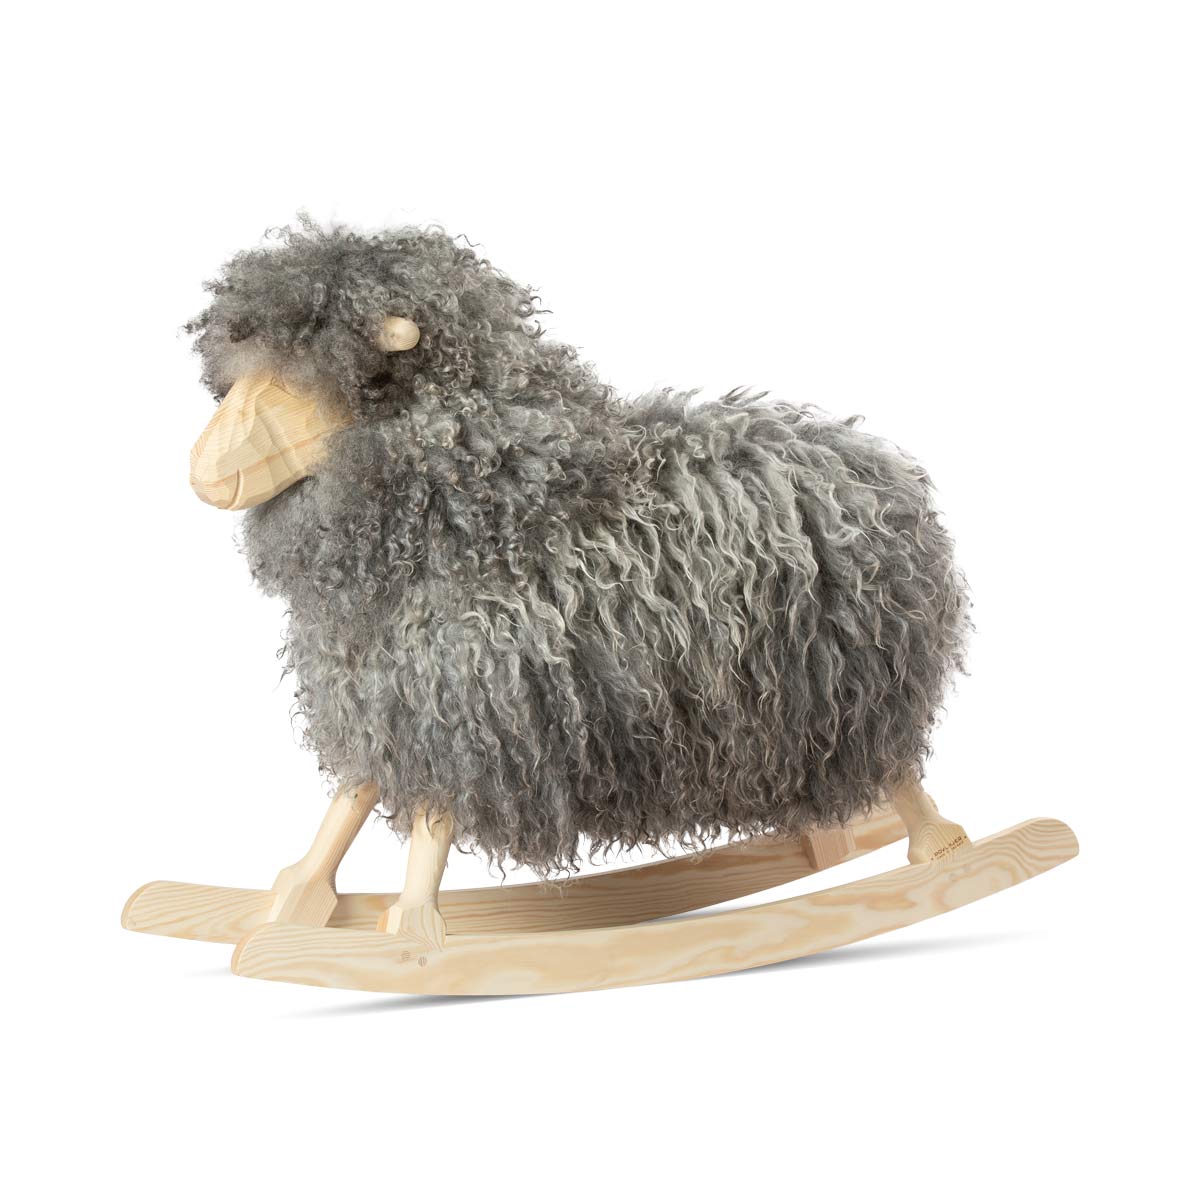 The Rocking Sheep │ Povl Kjer Design │ Made in Denmark │ Gotland Curly Wool │ Large